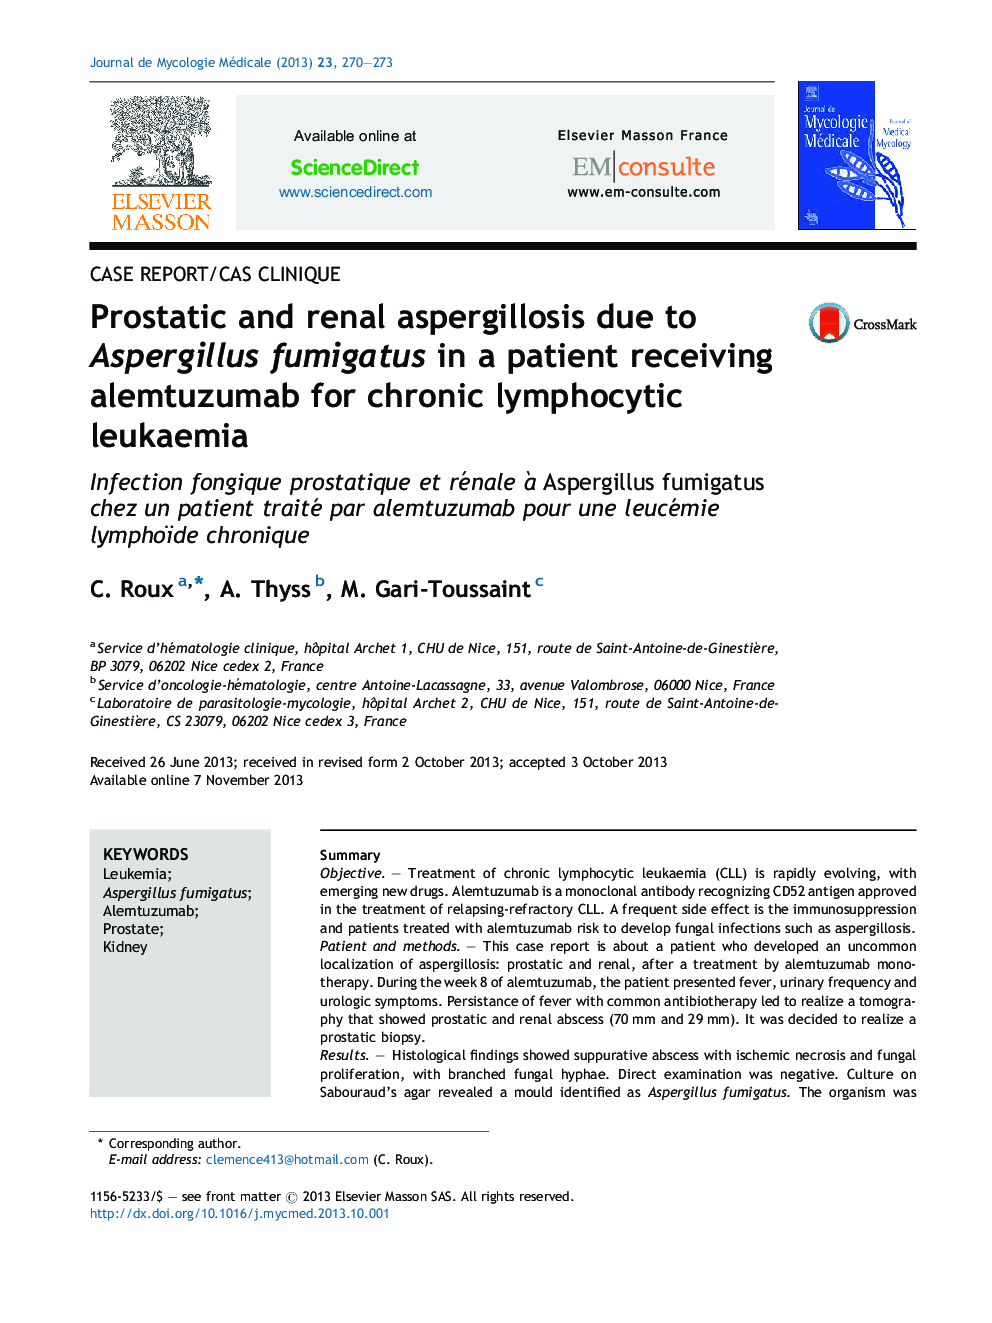 Prostatic and renal aspergillosis due to Aspergillus fumigatus in a patient receiving alemtuzumab for chronic lymphocytic leukaemia